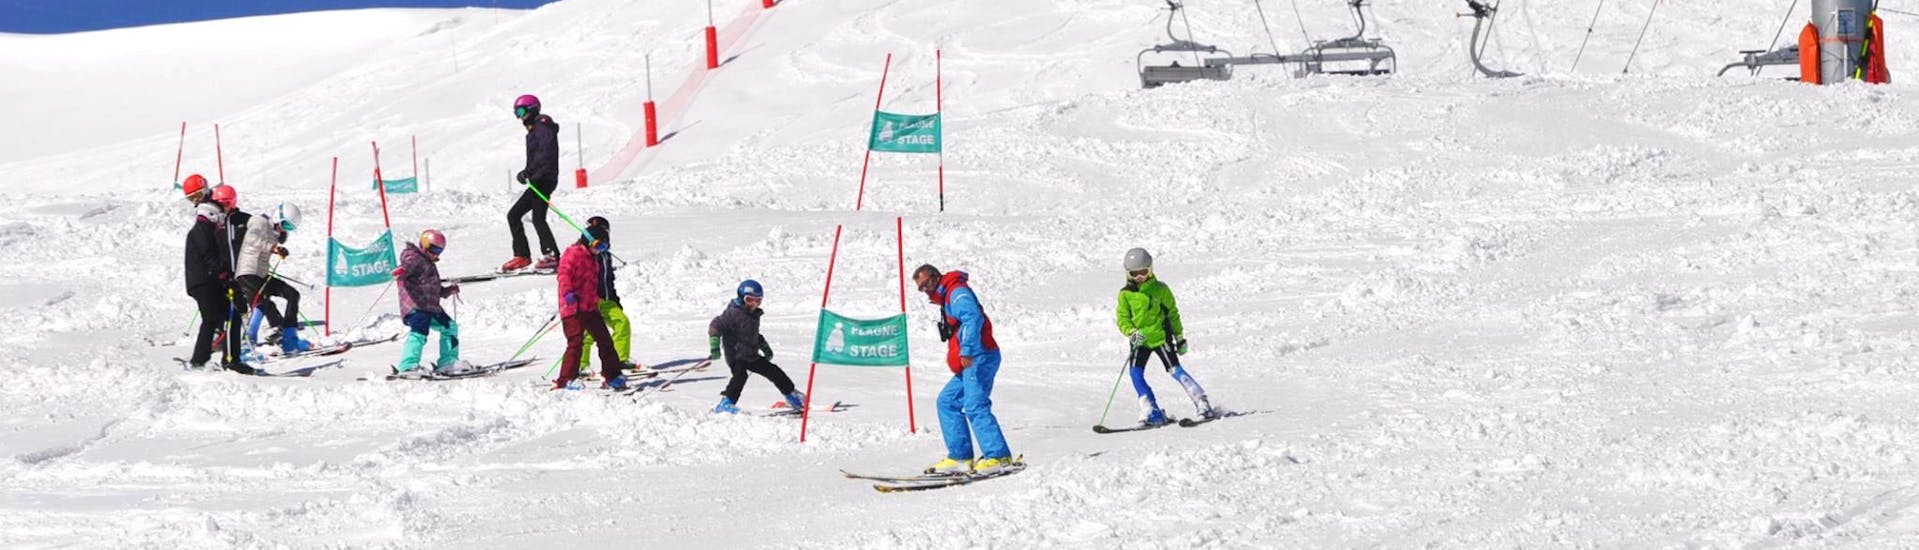 slalom-skiing-lessons-teens-and-adults-esf-la-plagne-hero